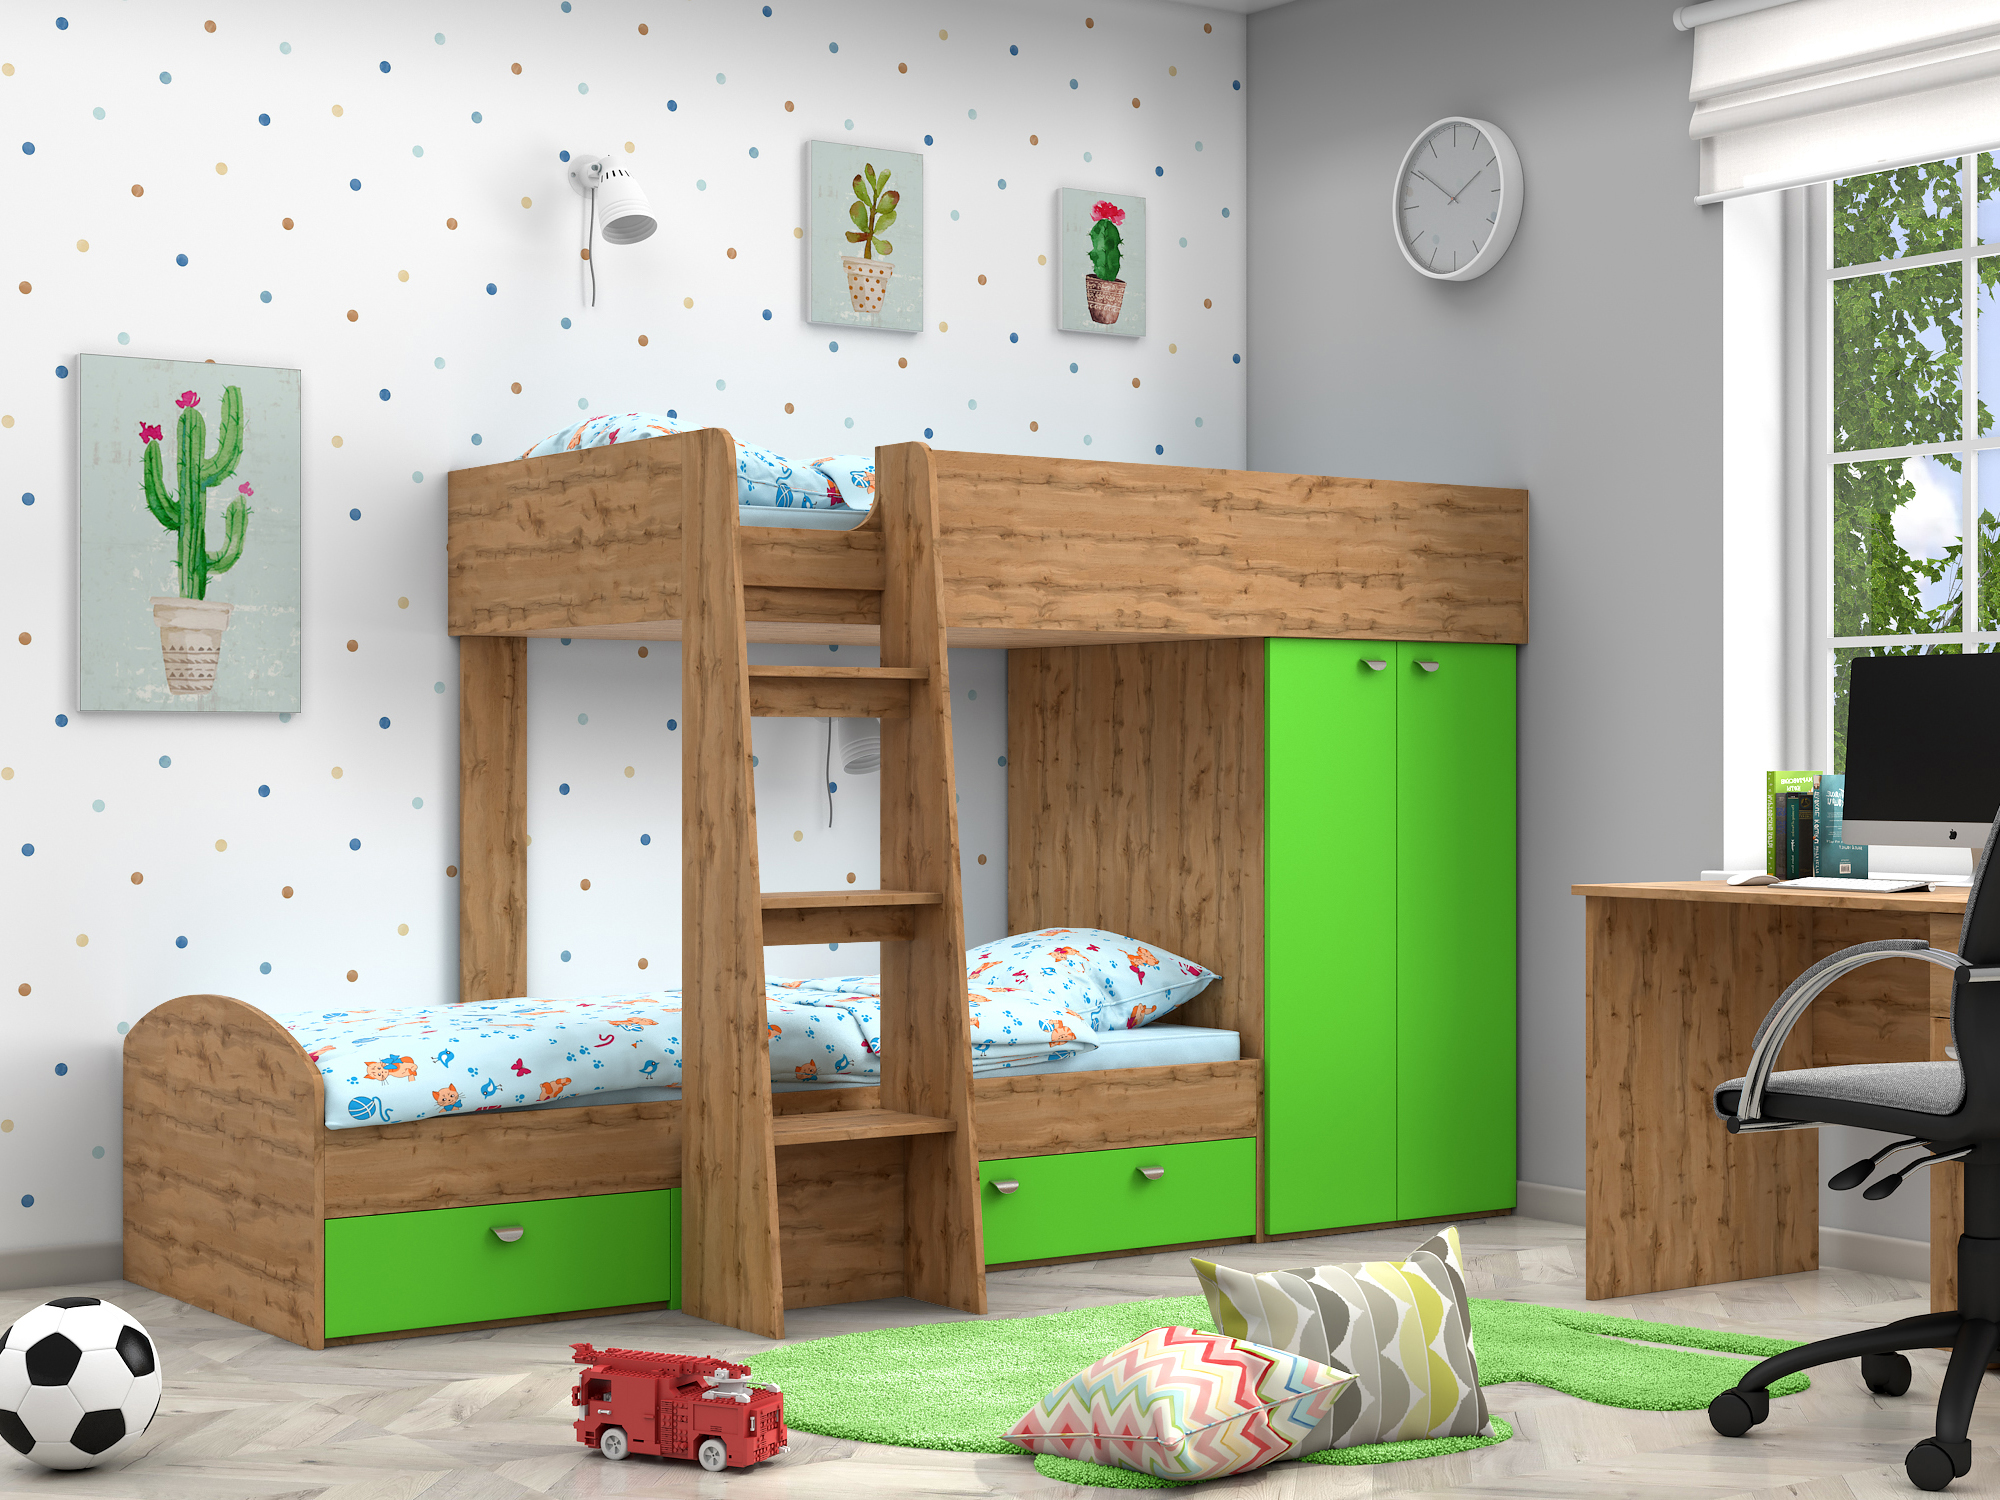 Двухъярусная кровать Golden Kids-2 (90х200) Зеленый, Бежевый, ЛДСП двухъярусная кровать golden kids 2 90х200 бежевый белый лдсп